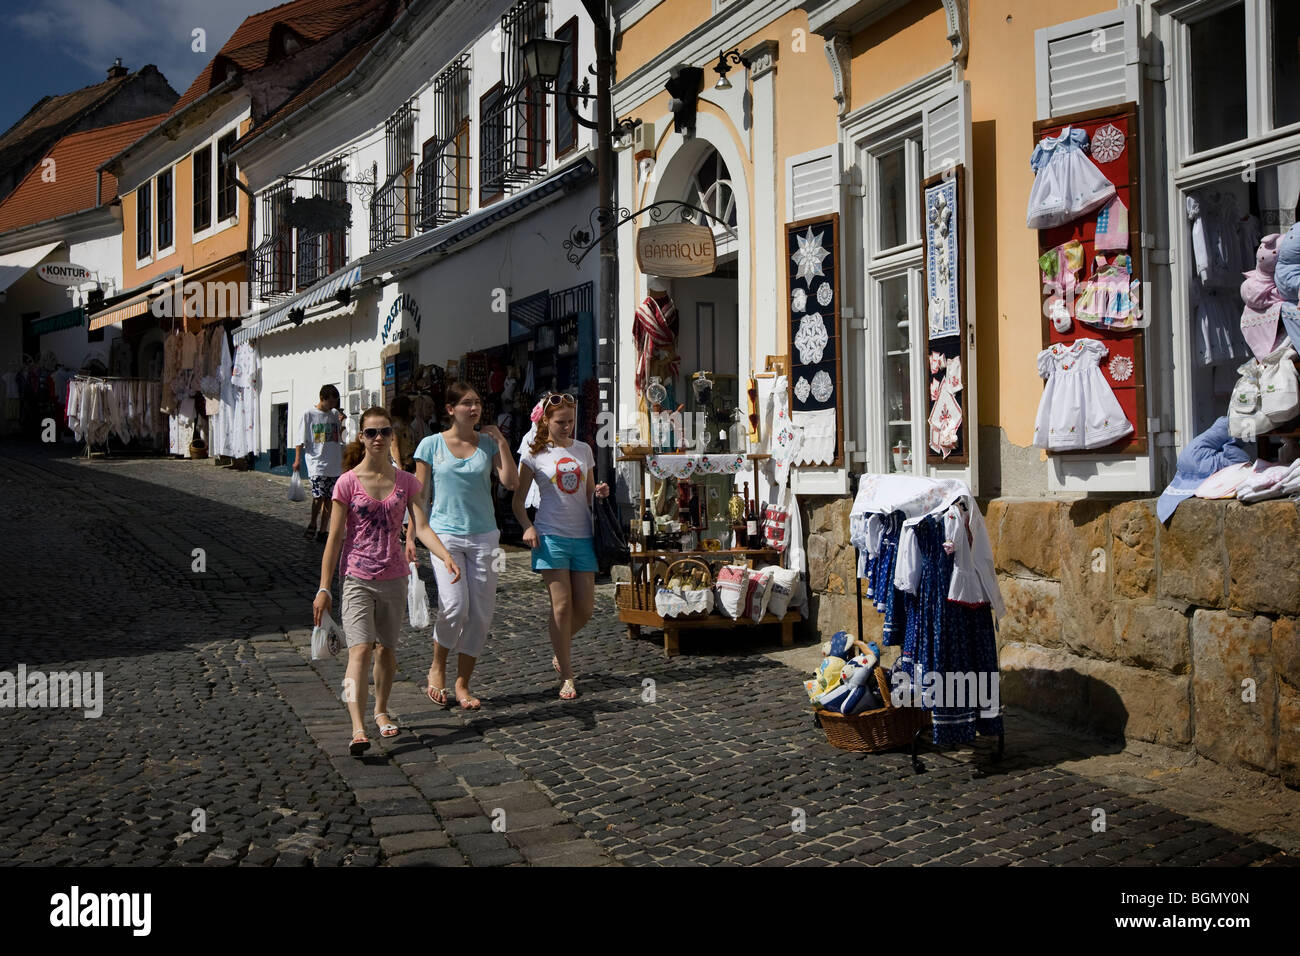 Tourists walking in the street, Szentendre, Budapest, Hungary Stock Photo